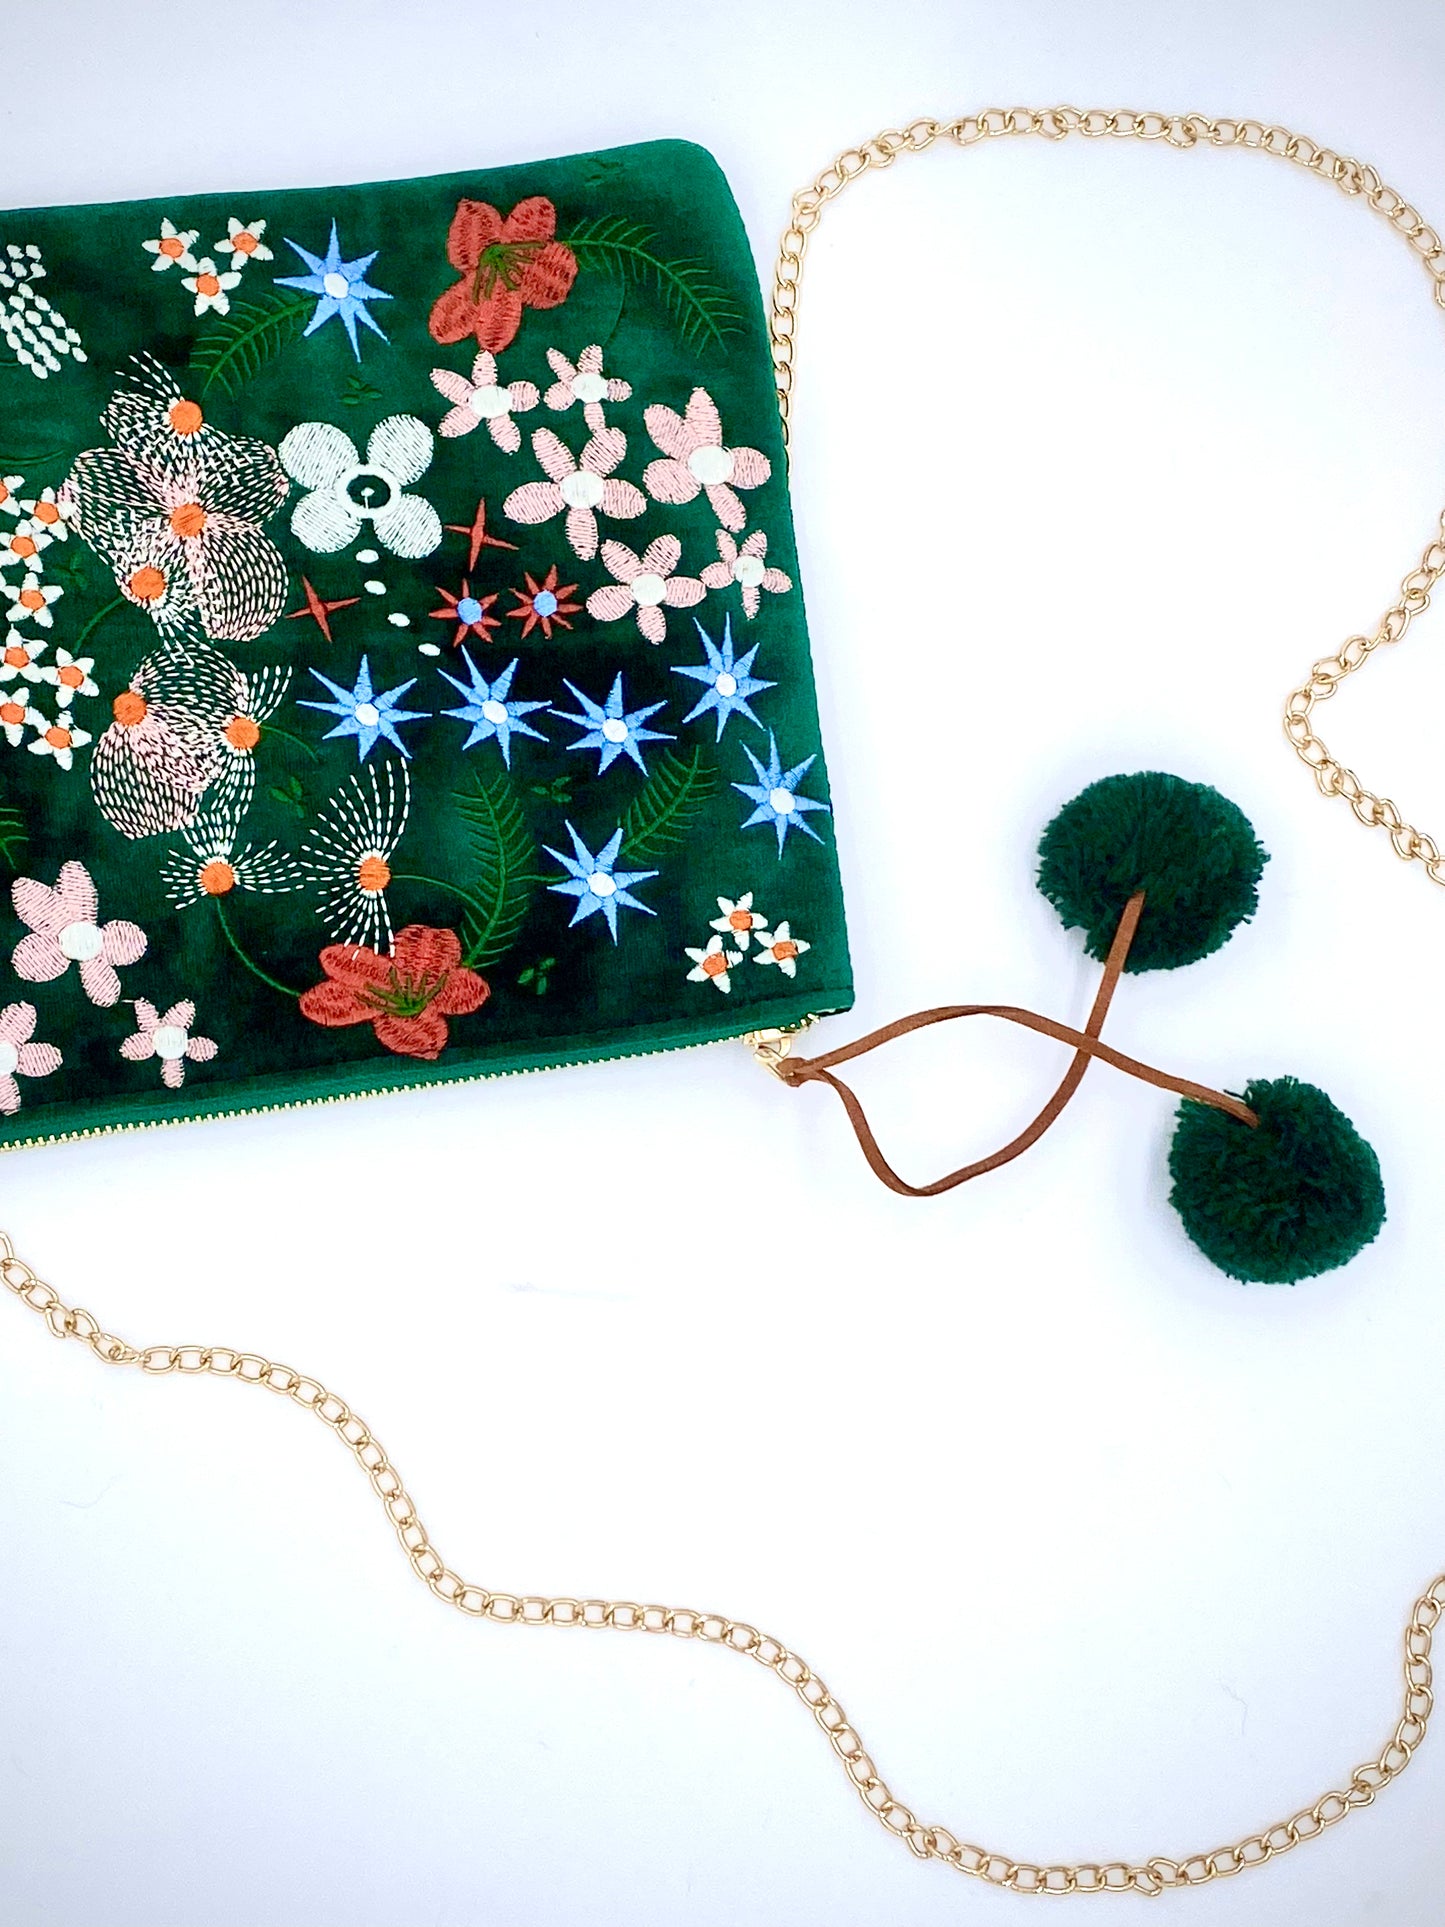 Ask Alice Emerald Velvet Embroidery Bag